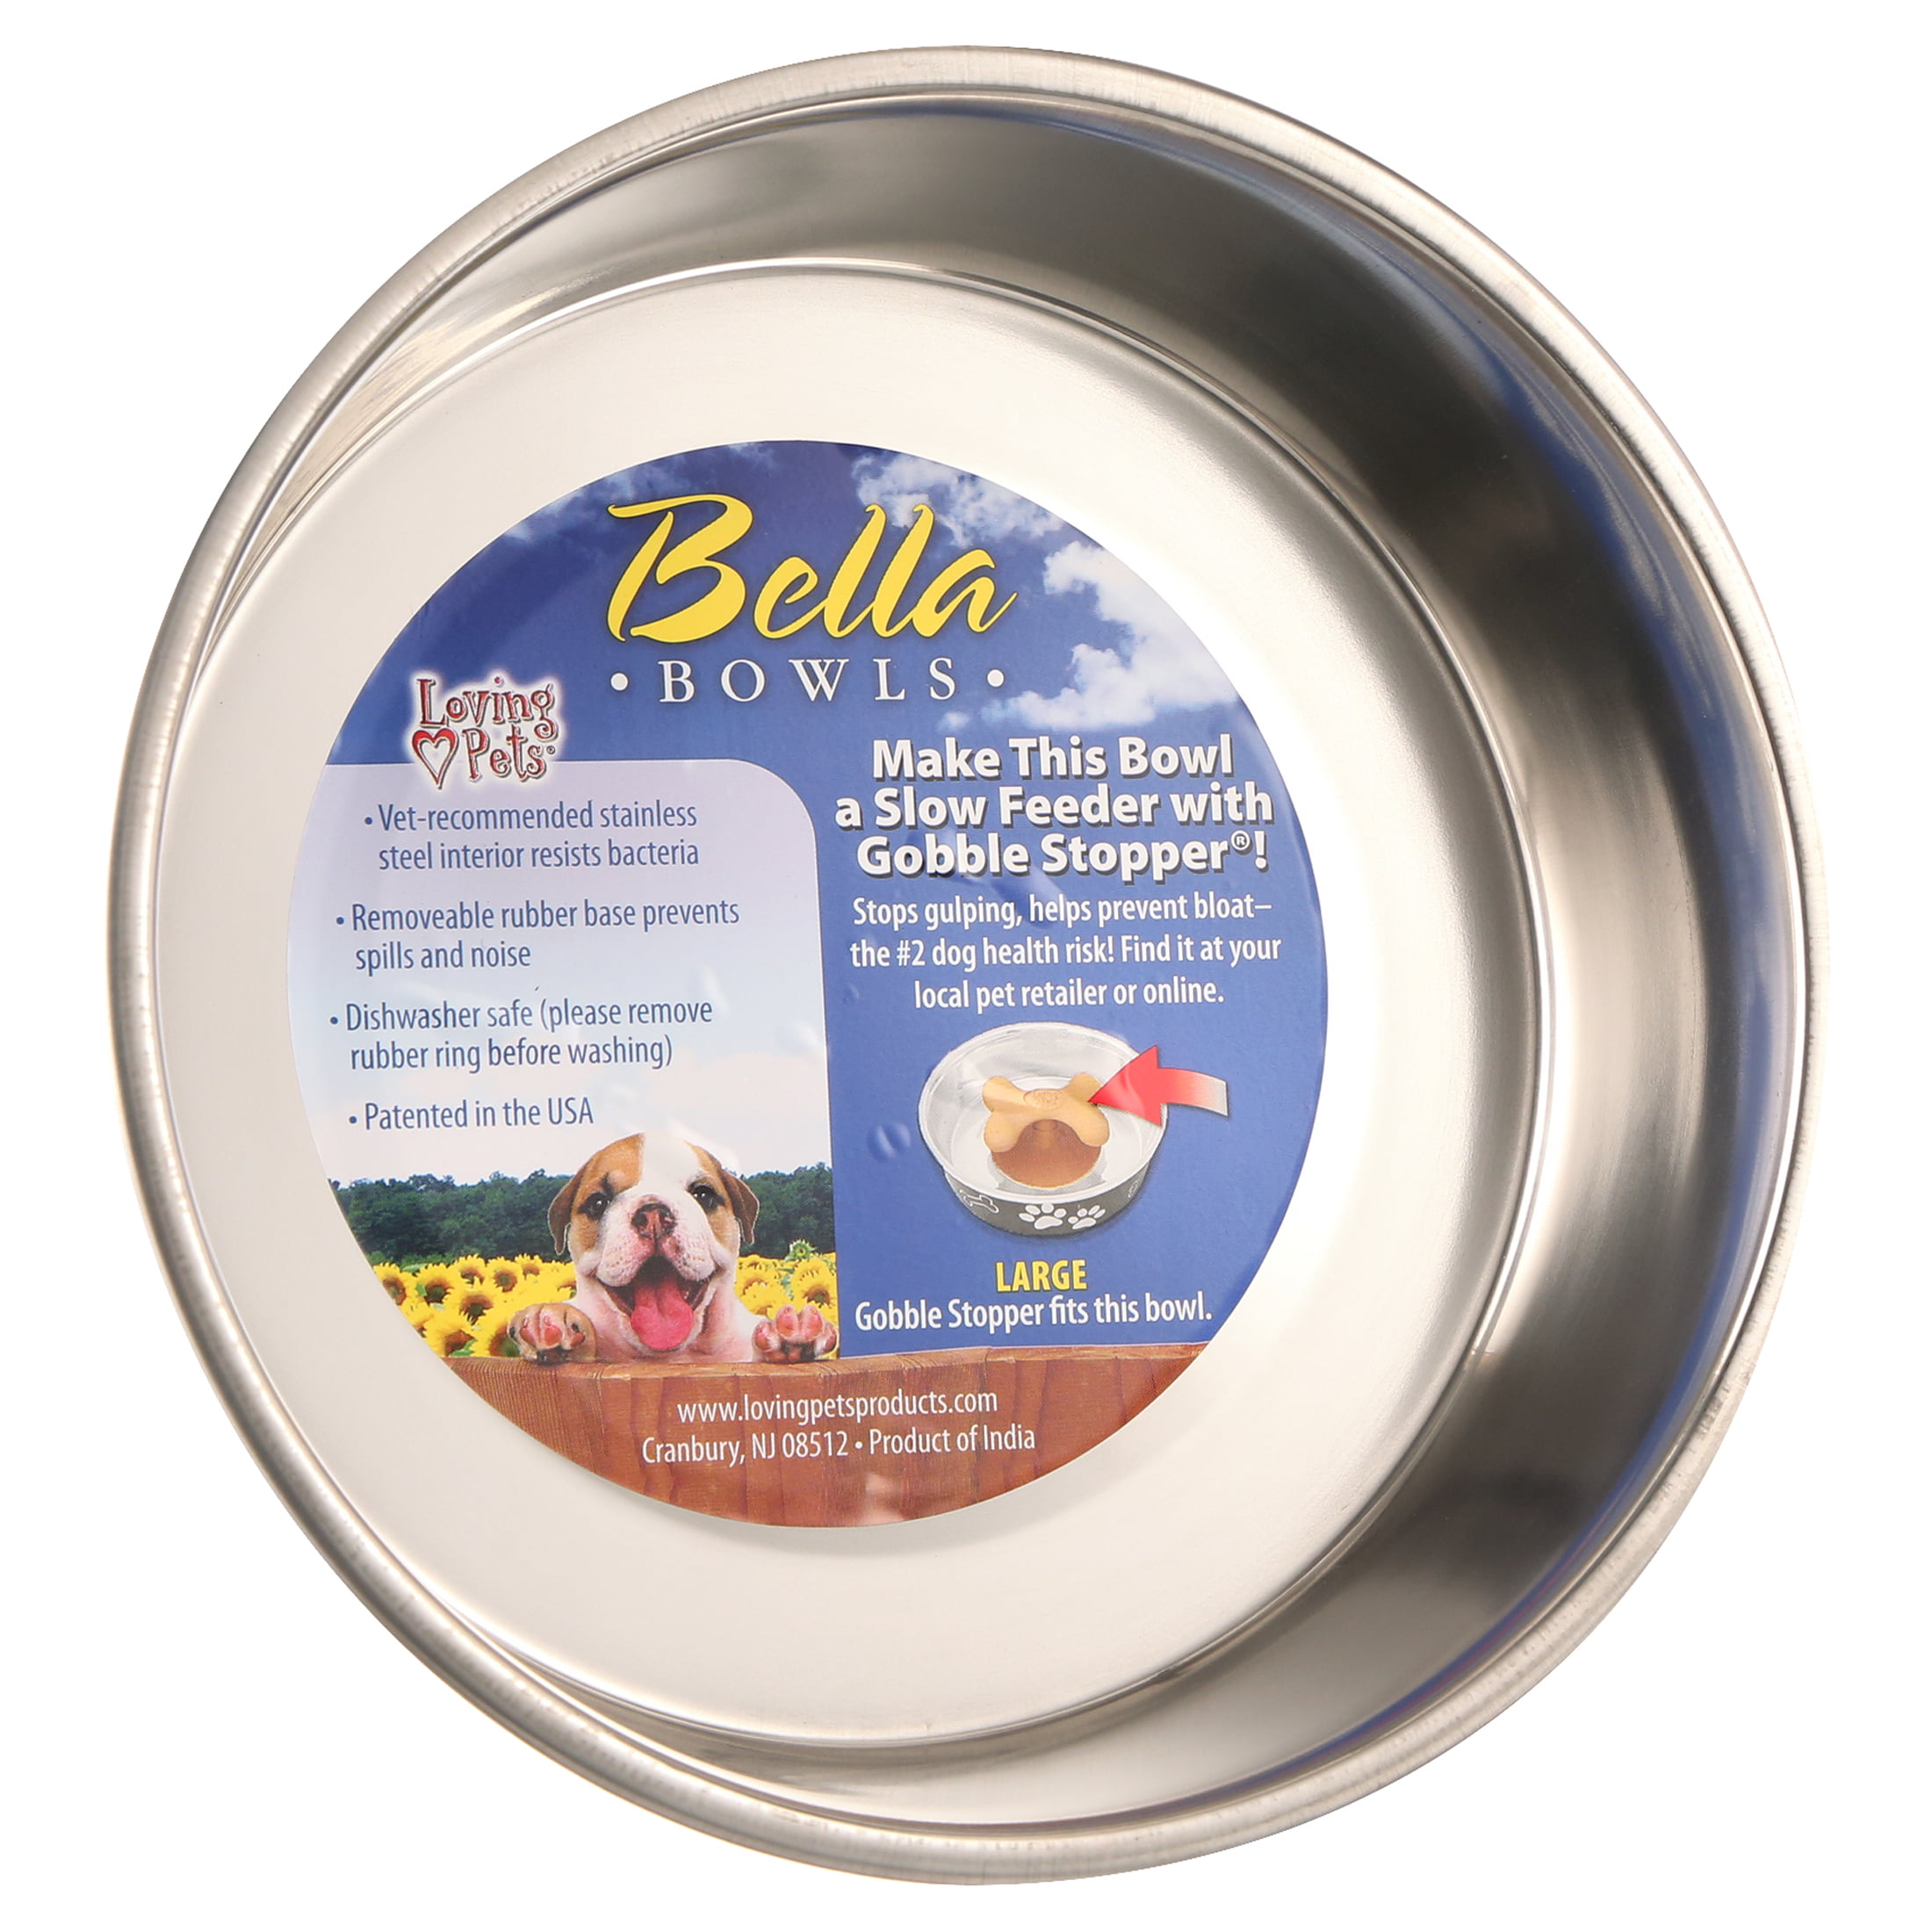 Bella Bowls Loving Pets Dog Bowl, Green, Large - Alsip Home & Nursery